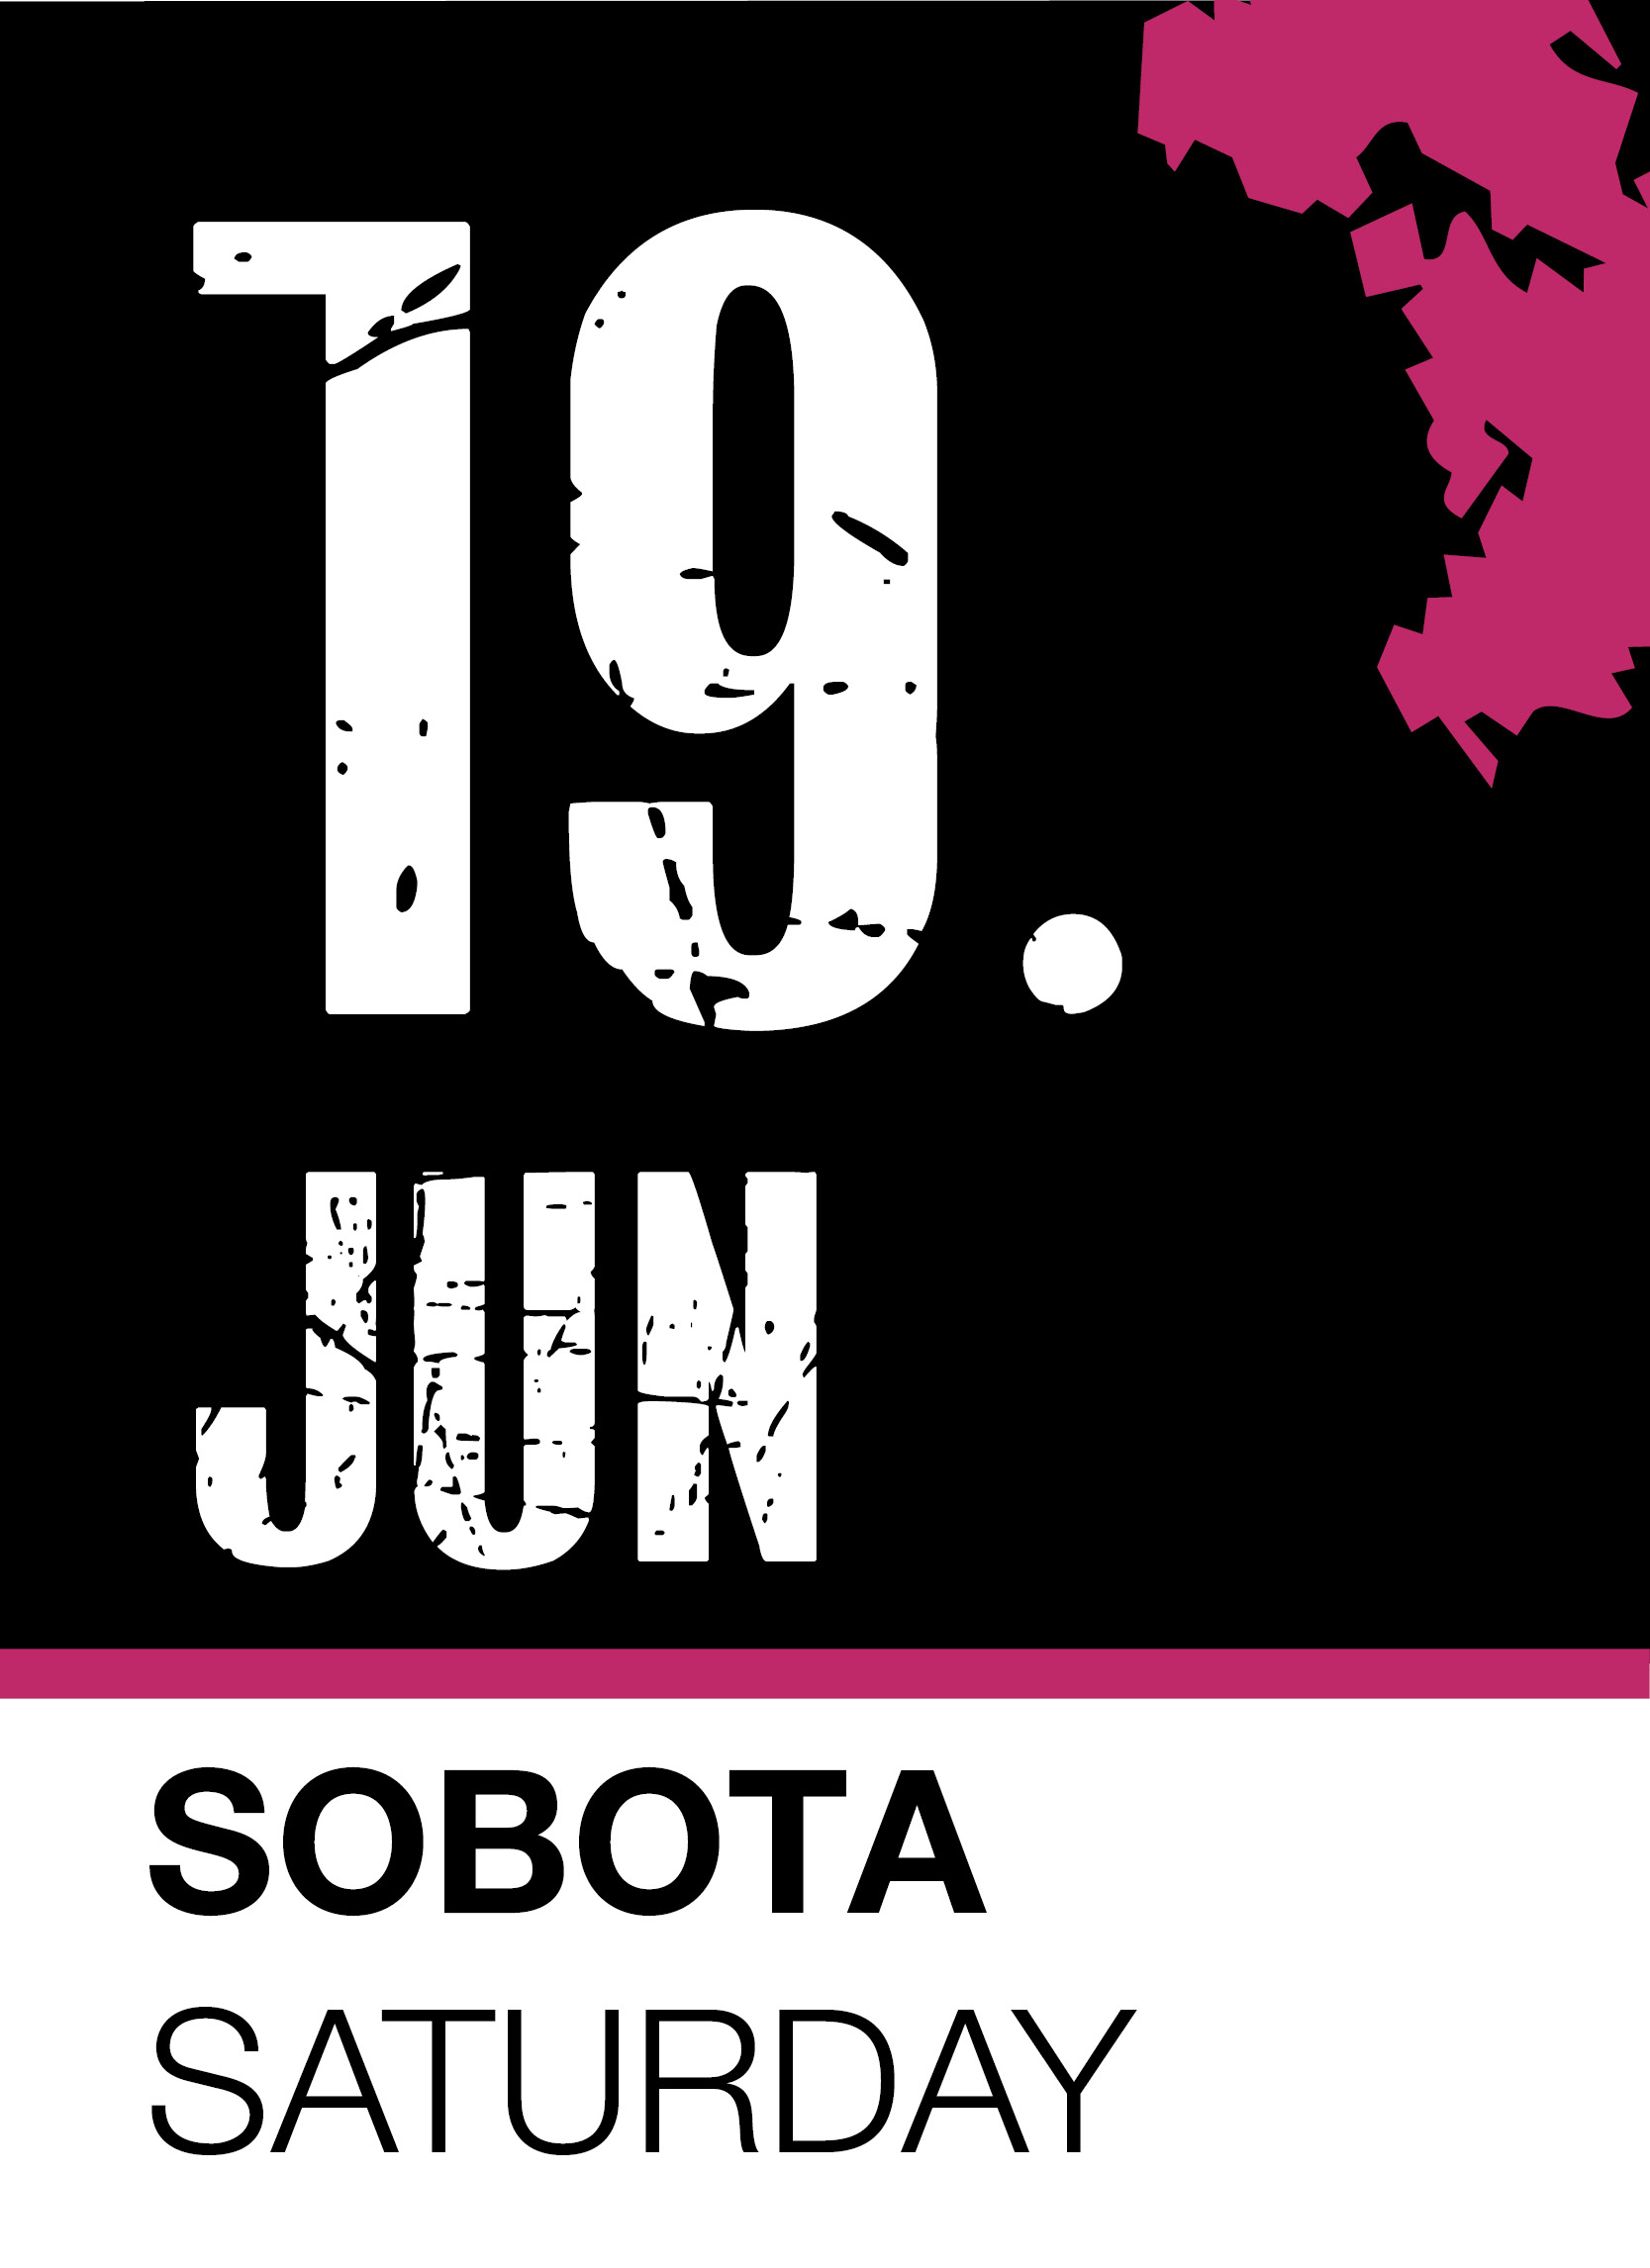 Ljubljana Pride Parade and Balkan Trans Inter March